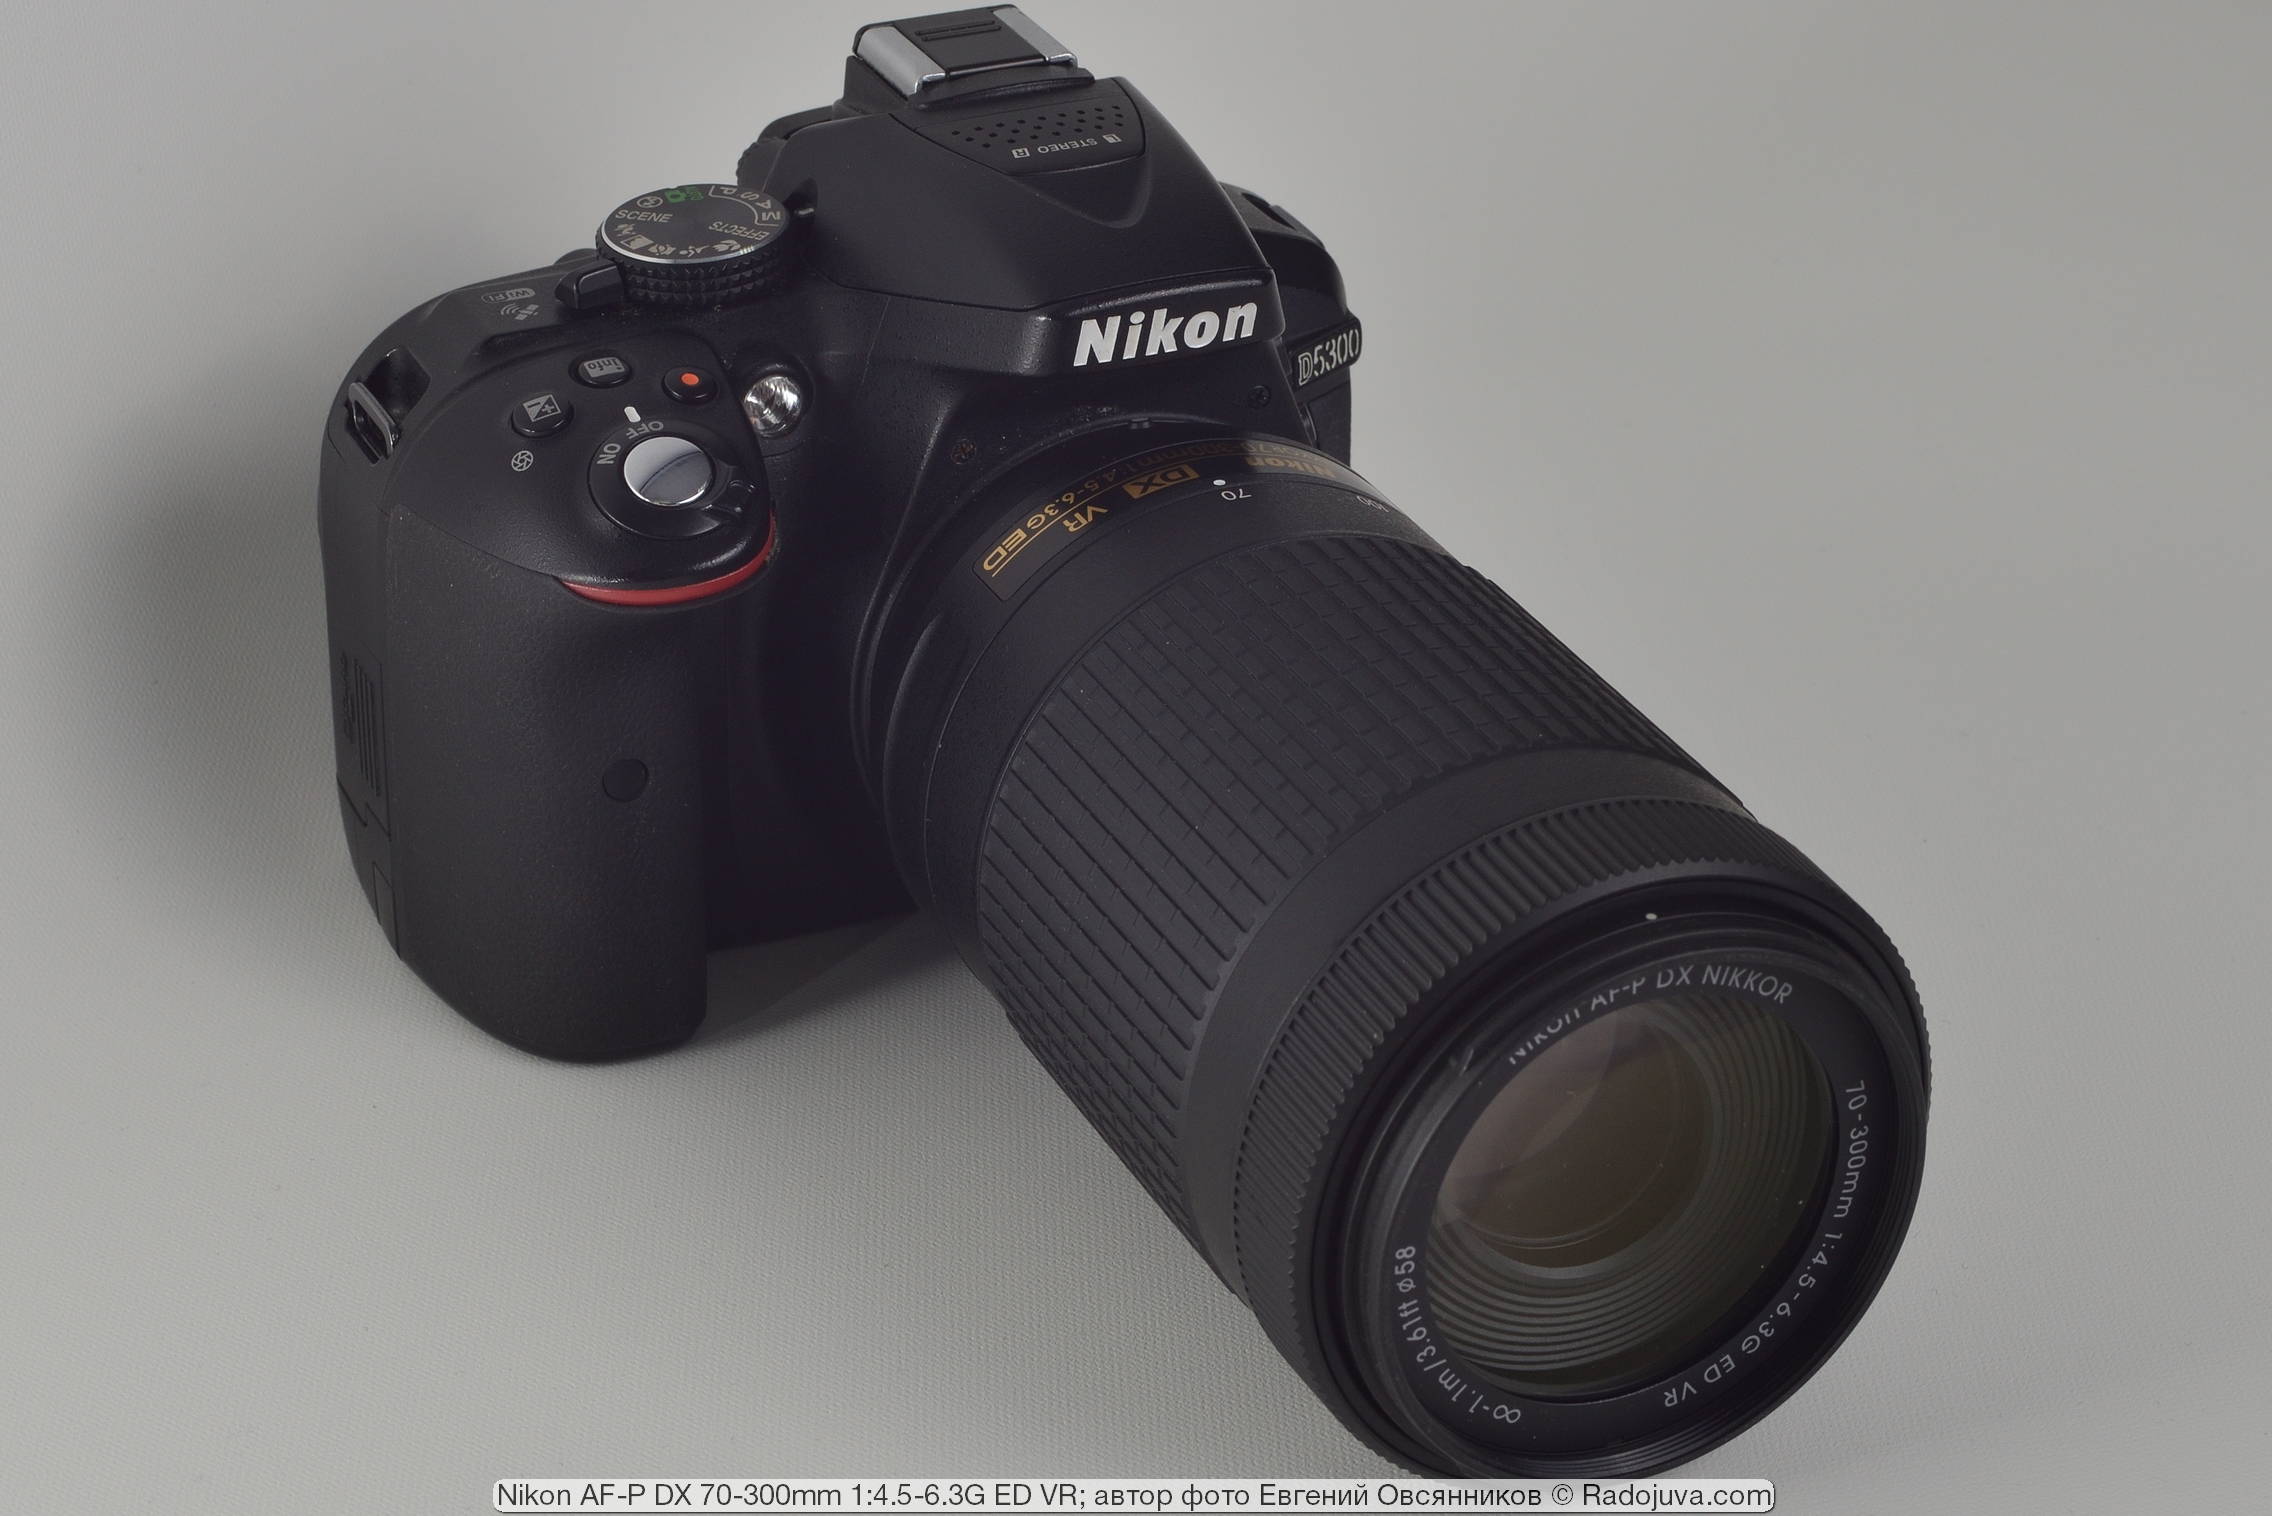 Nikon AF-P DX Nikkor 70-300 mm 1: 4.5-6.3G ED VR. Reseña del lector  Radozhiva | Contento